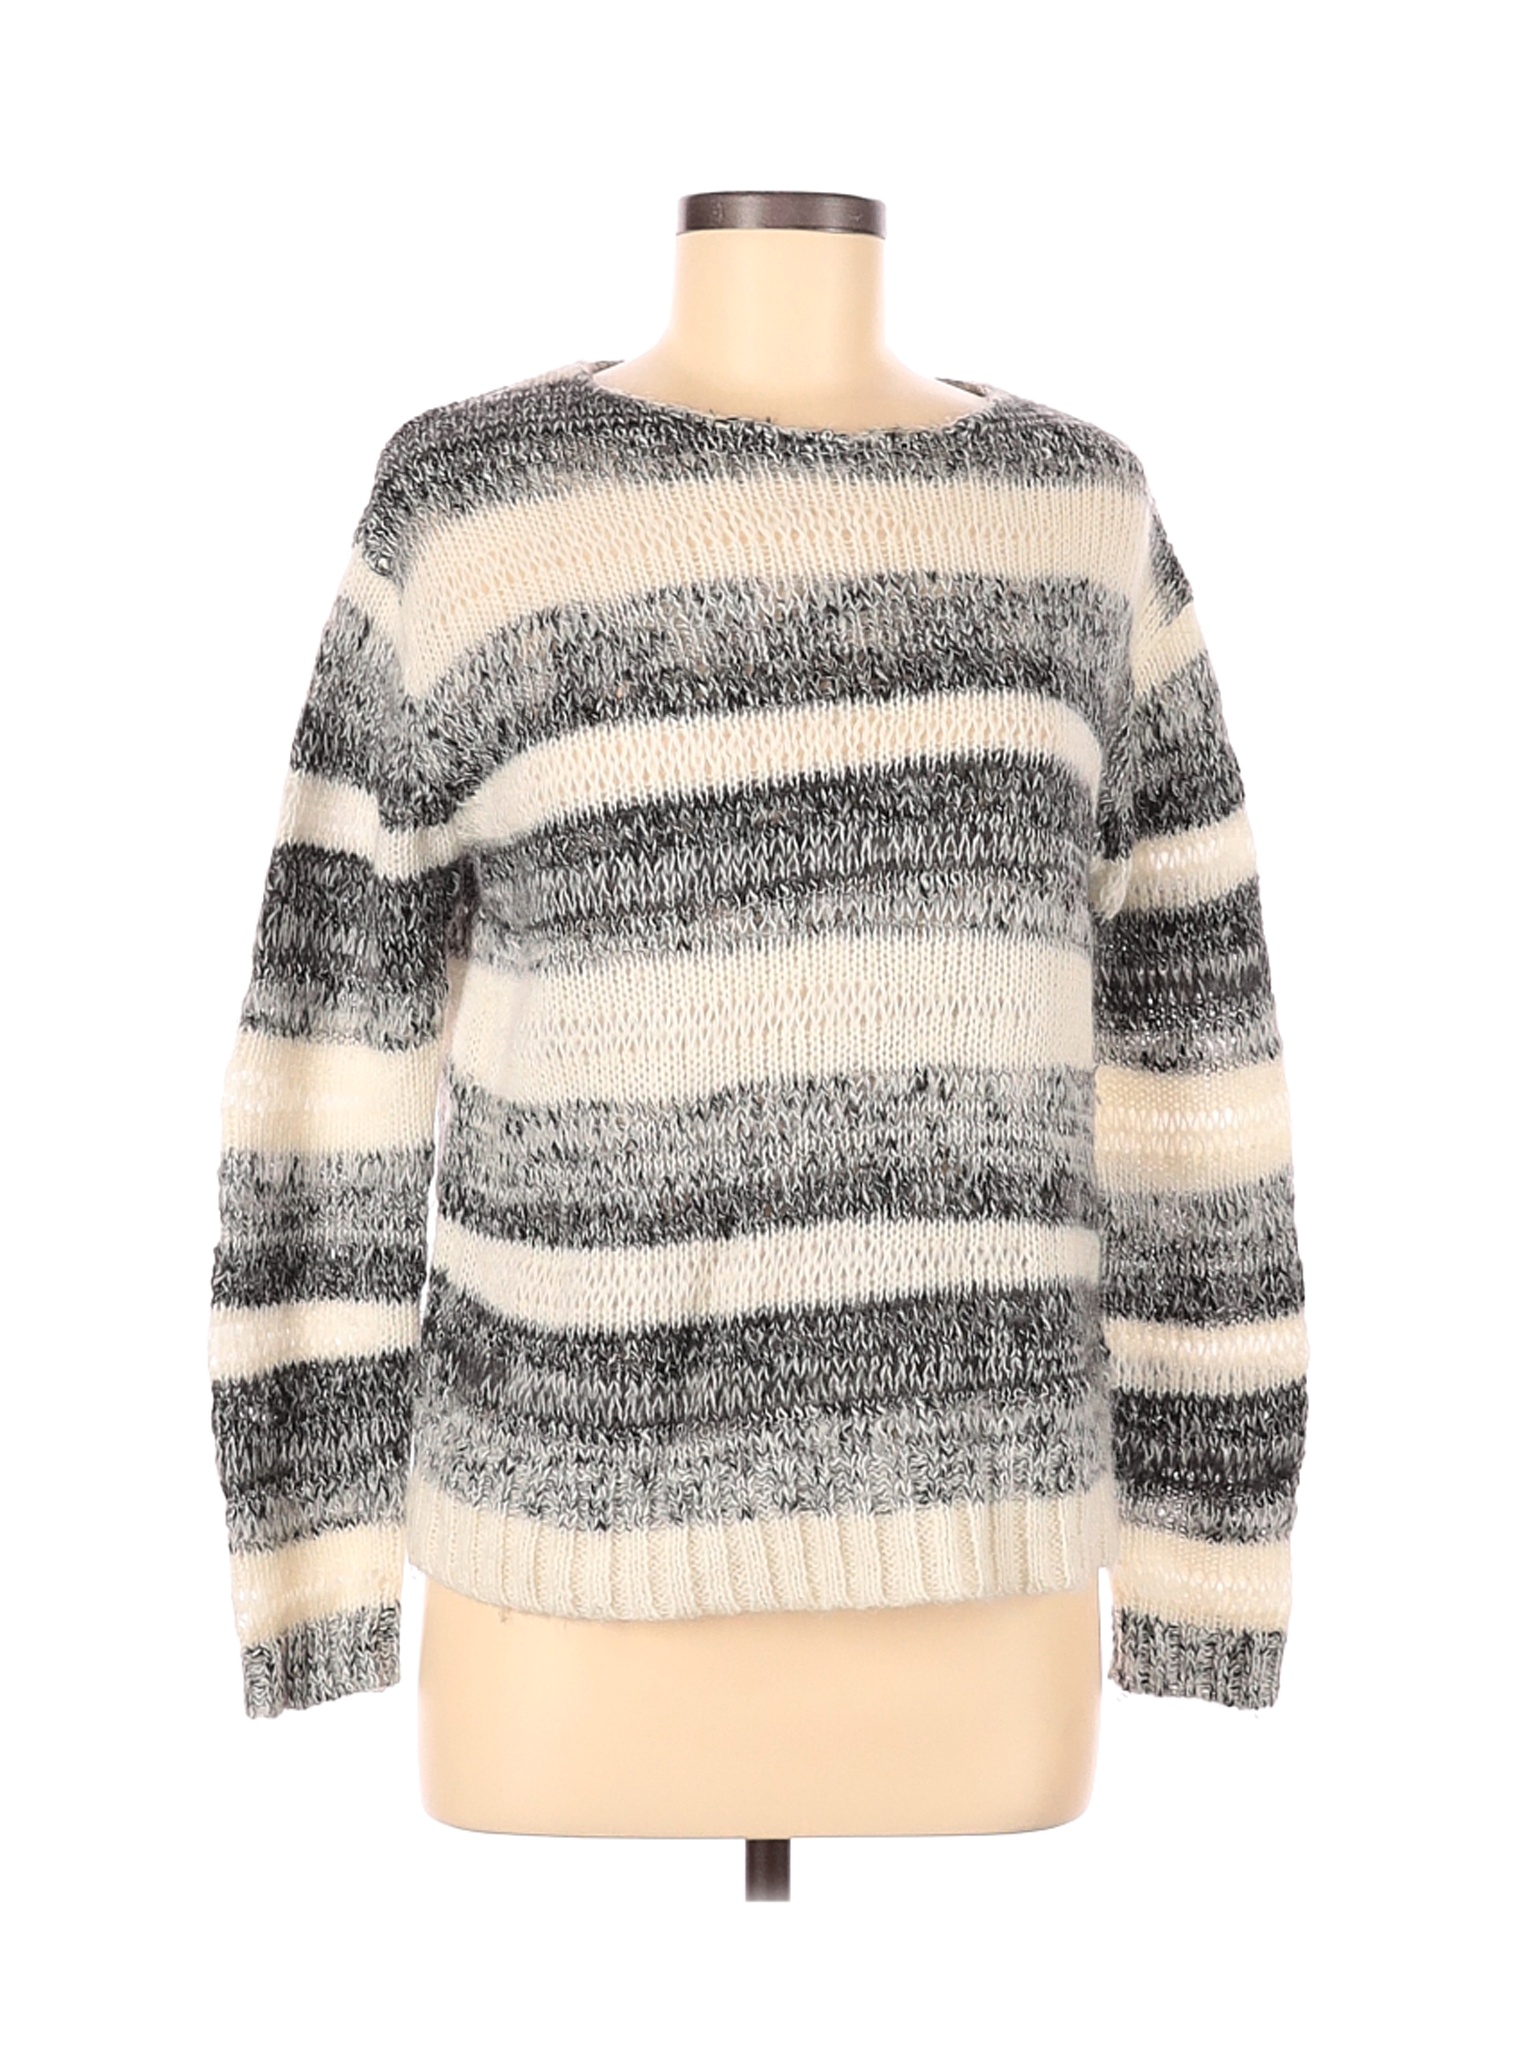 Cynthia Rowley TJX Women Gray Pullover Sweater S | eBay